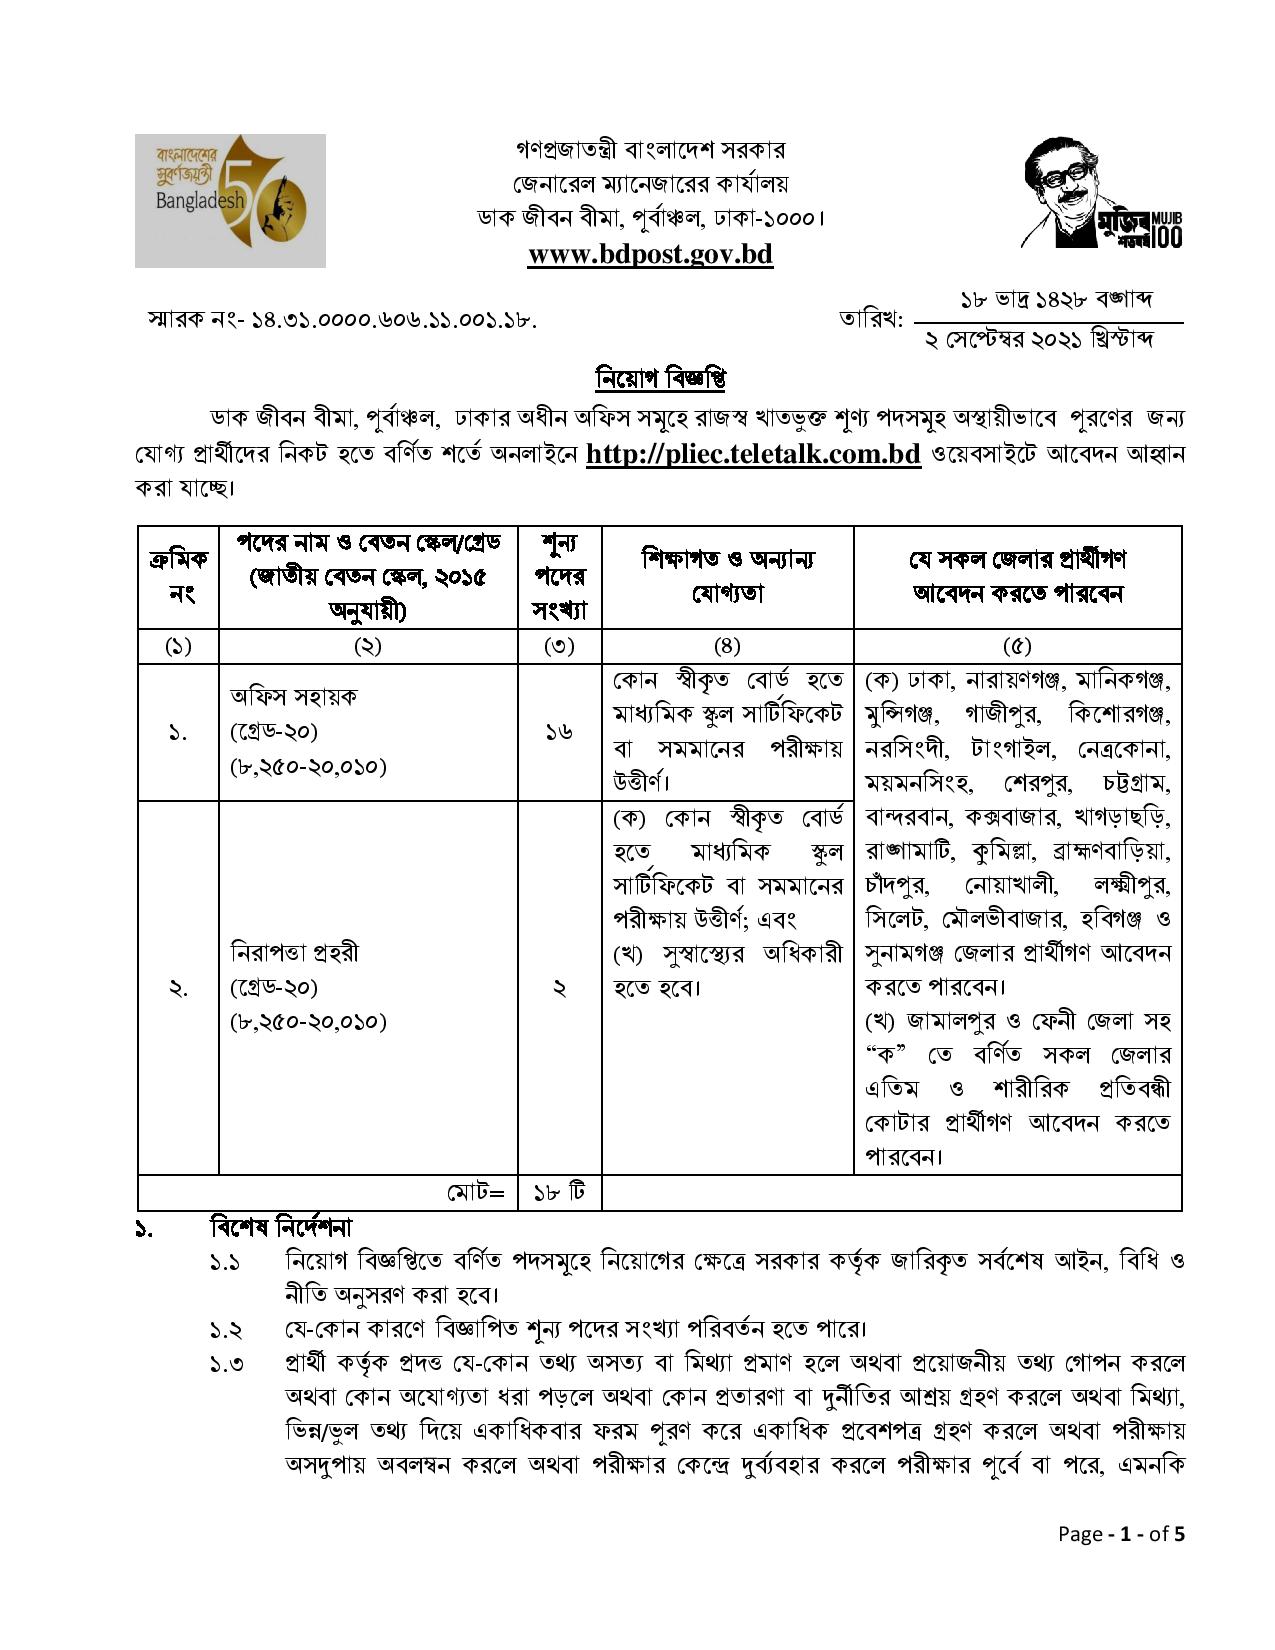 bd post office job circular 2021